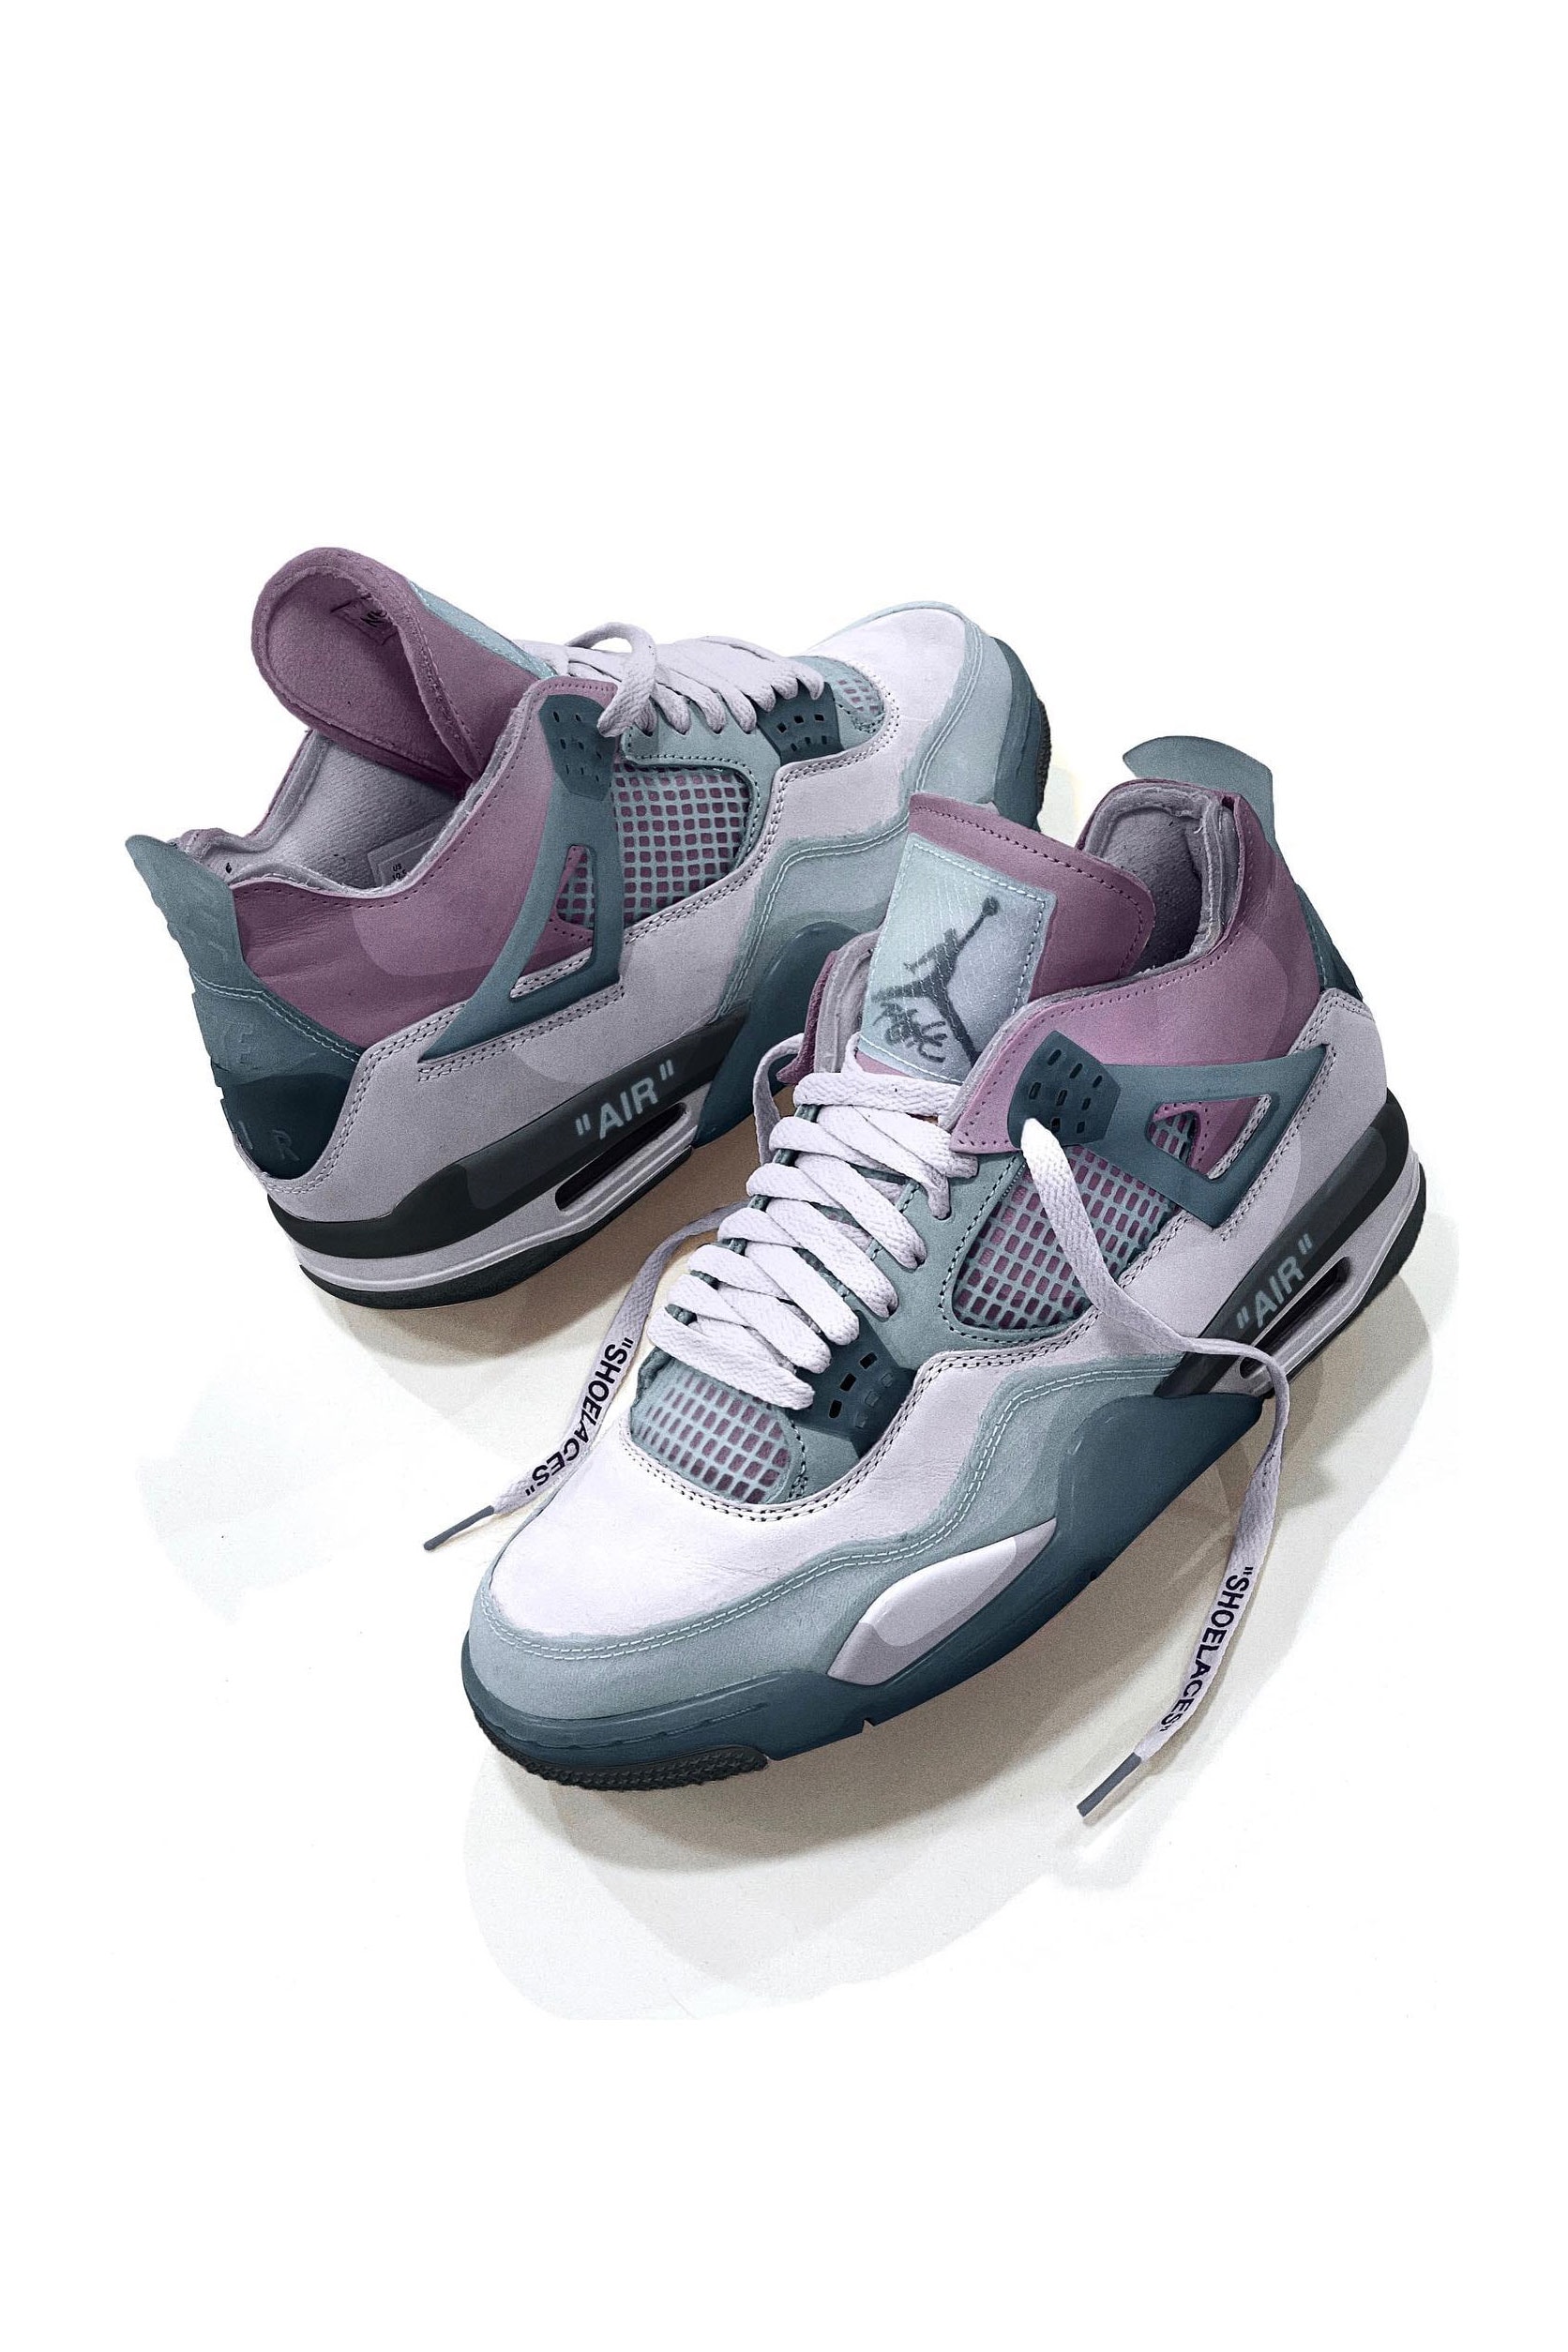 Andrew Chiou andu c Air Jordan 4 Mecha mewtwo purple off white virgil blue release info date price